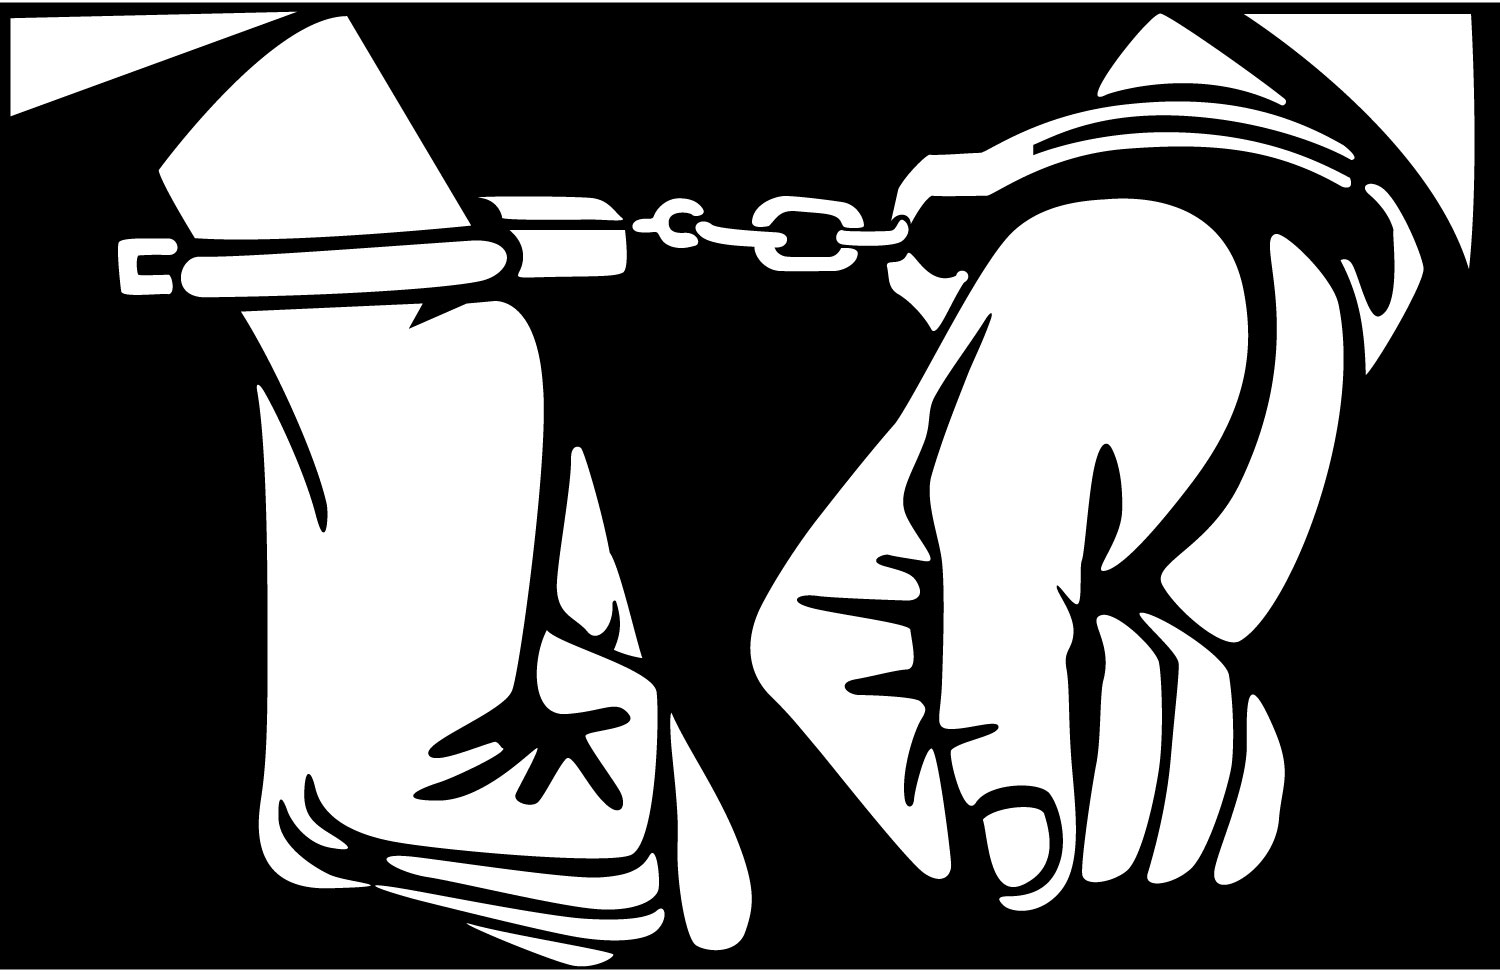 Handcuffs On Hands